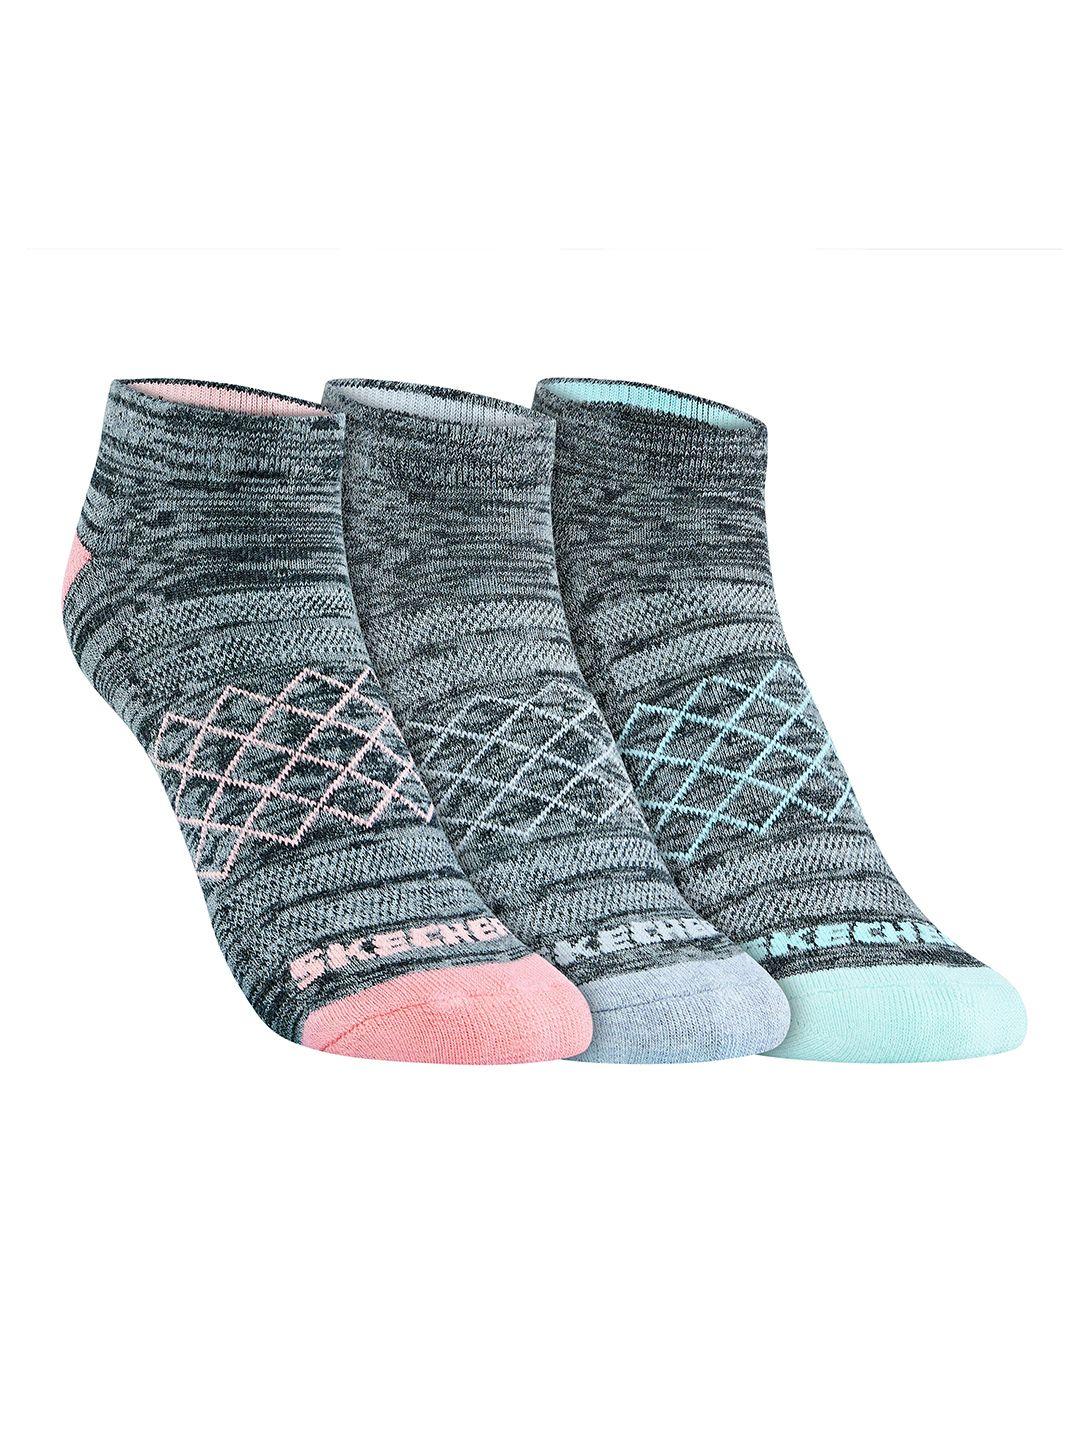 skechers-men-pack-of-3-patterned-cotton-ankle-length-half-cushion-low-cut-socks